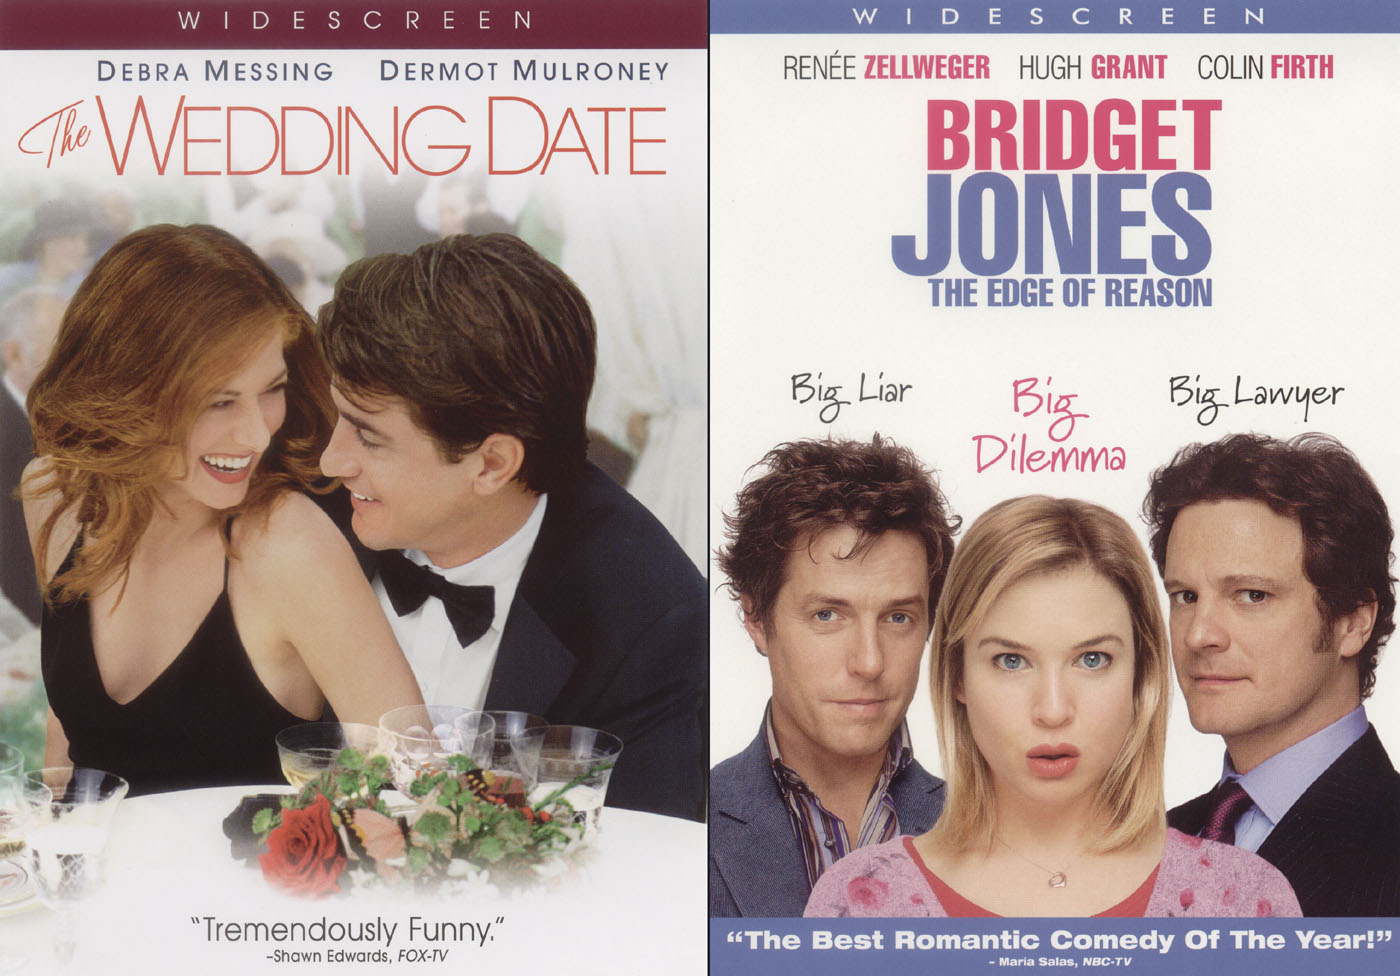 Bridget Jones The Edge of Reason dvd Movie Renee Zellweger Collin Firth  Comedy